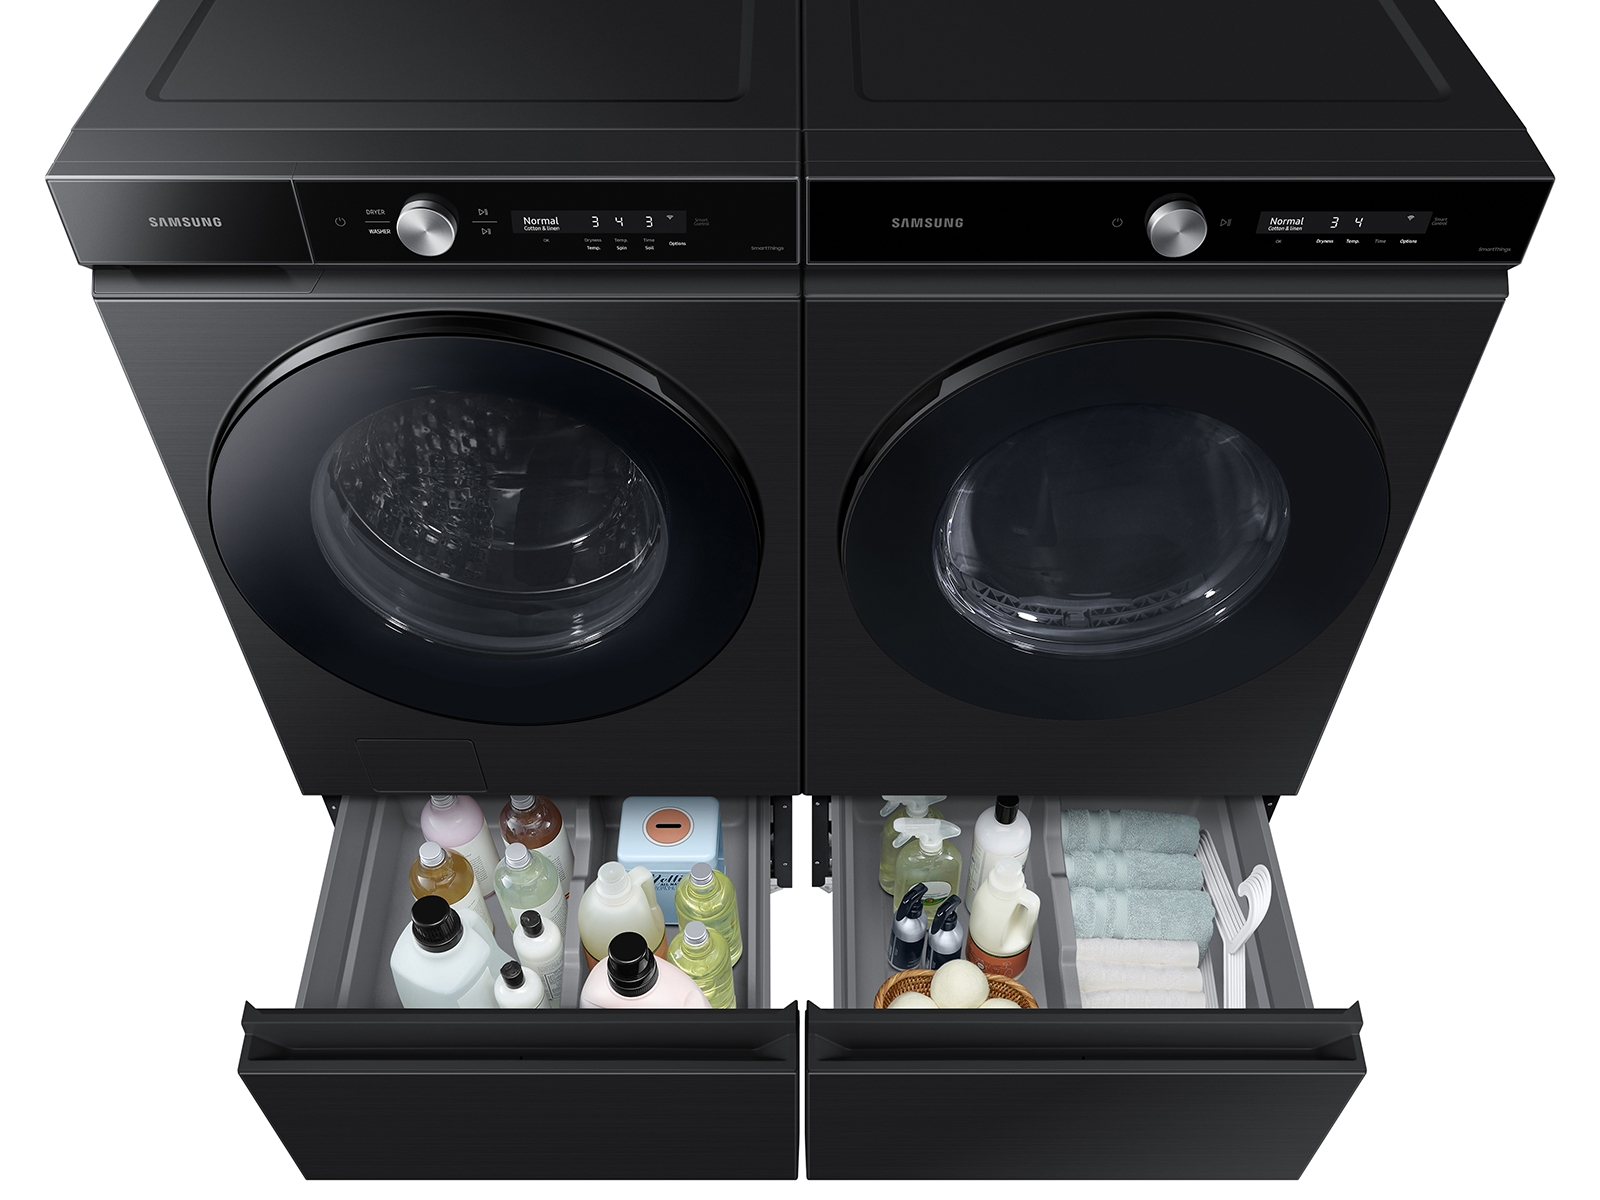 Samsung - 27 Washer/Dryer Laundry Pedestal - Black stainless steel